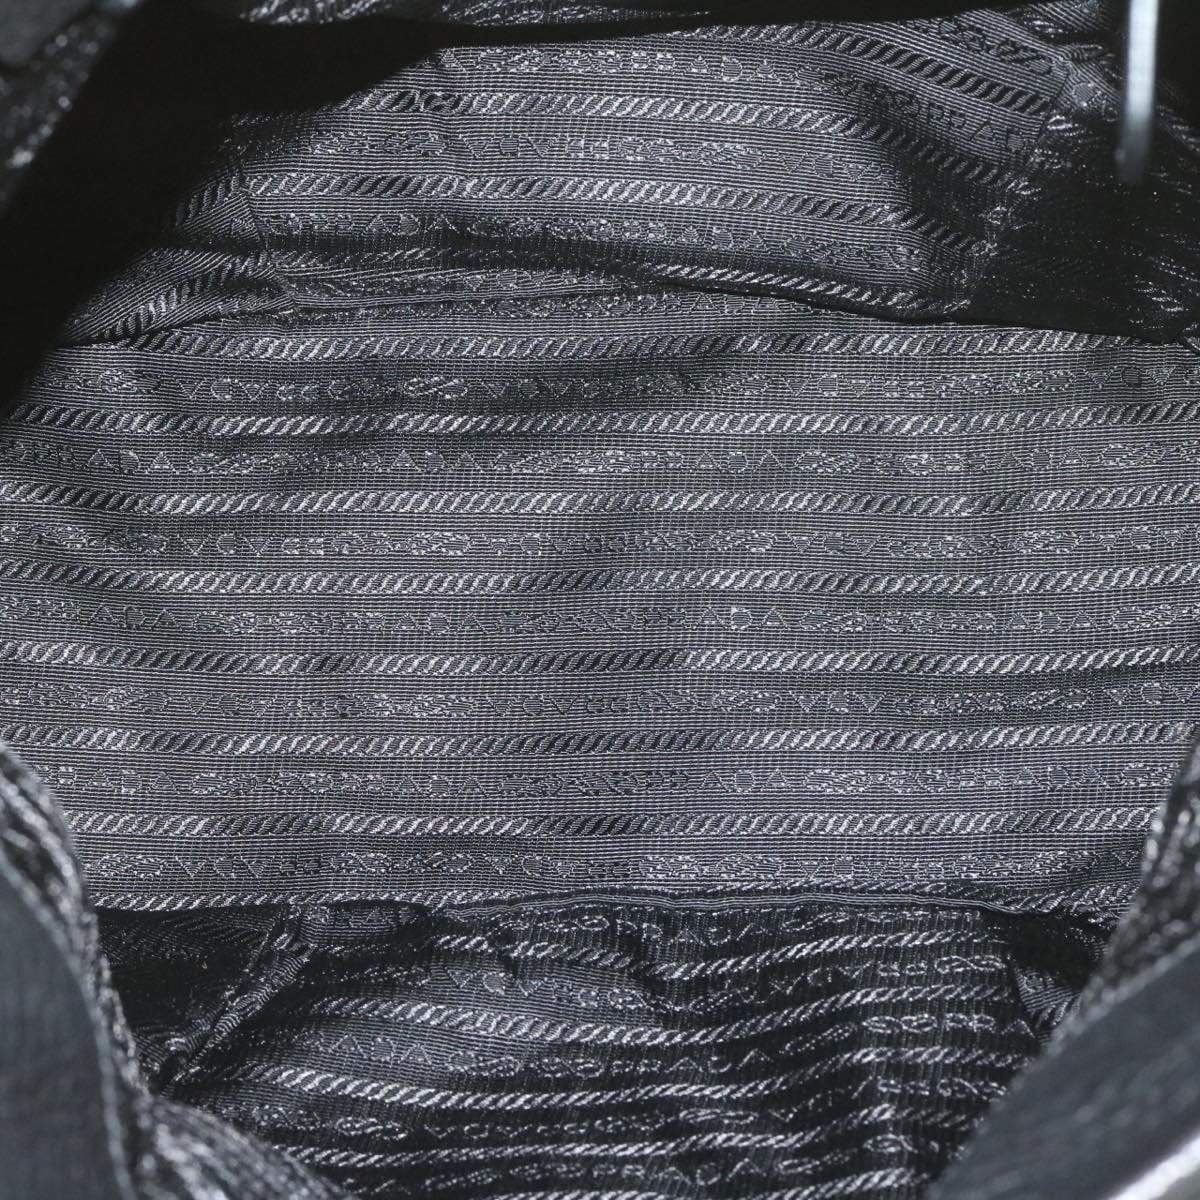 Prada Prada Nylon 2Way Black Shoulder Bag